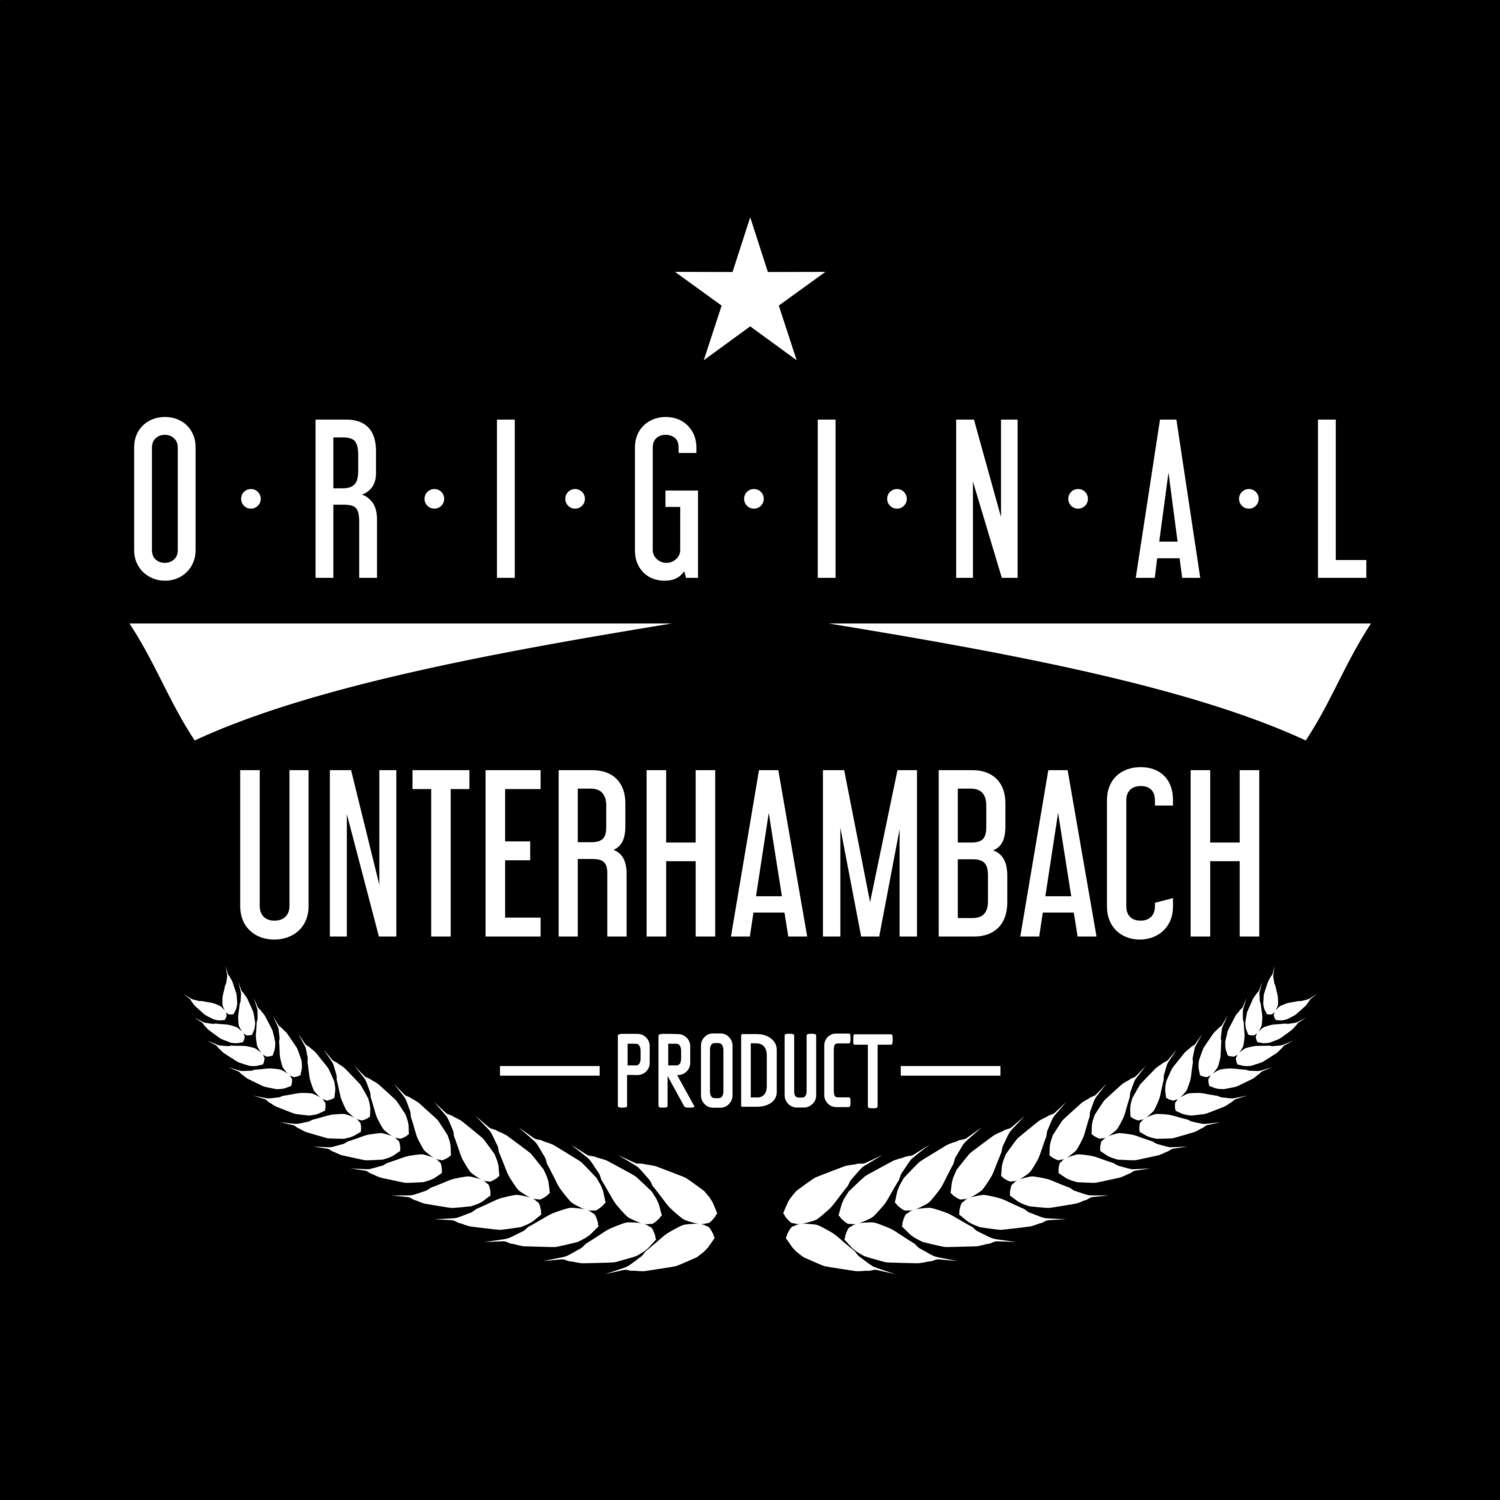 Unterhambach T-Shirt »Original Product«